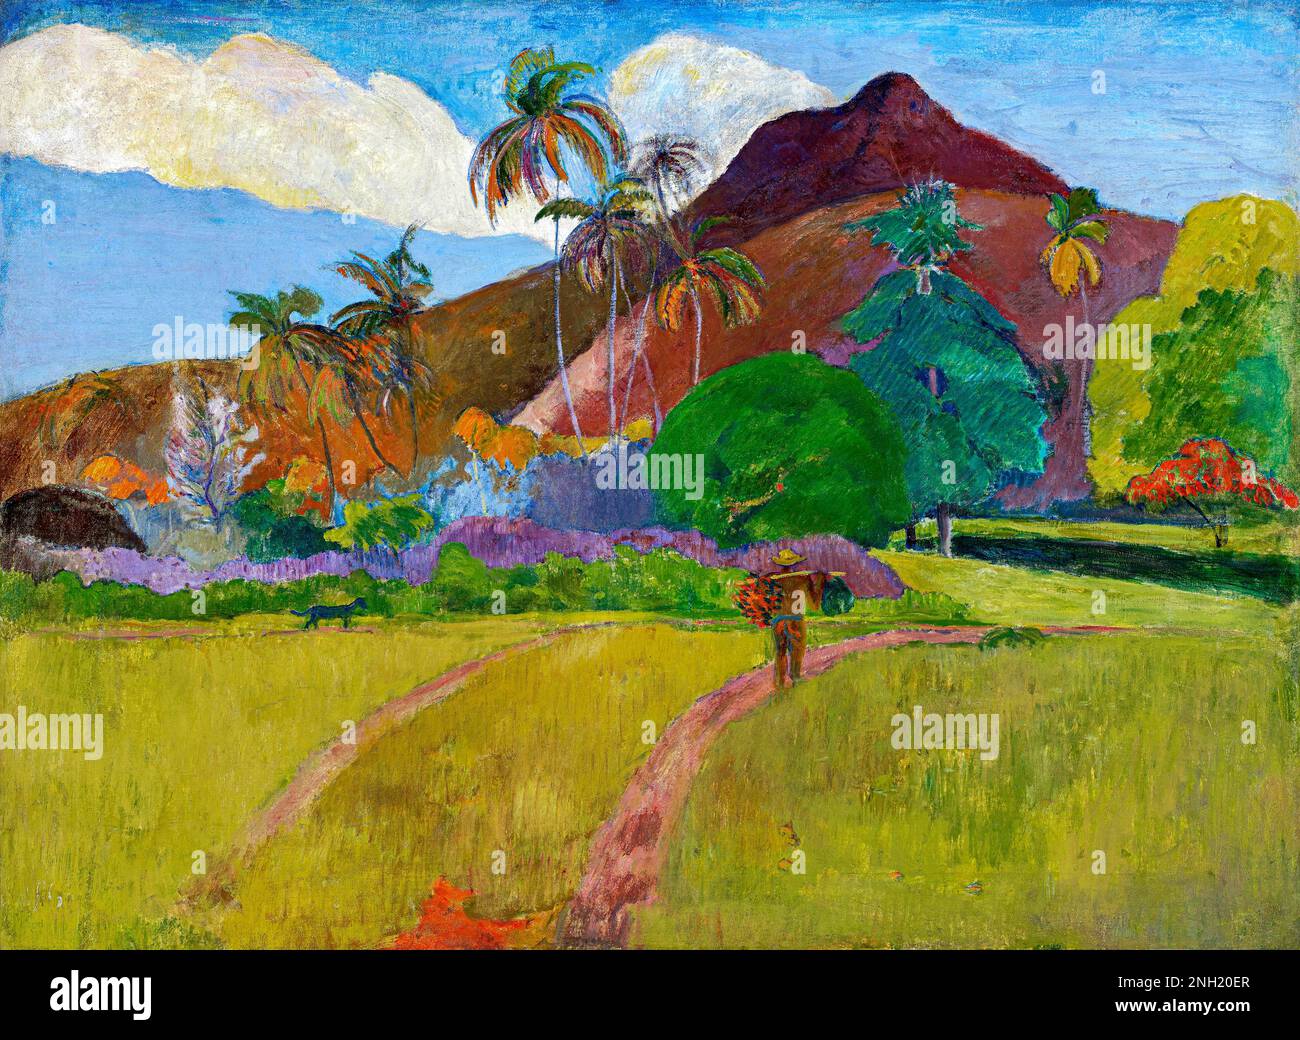 Paul Gauguin's Tahitian Landscape (1891) famous painting. Original from the Minneapolis Institute of Art. Stock Photo